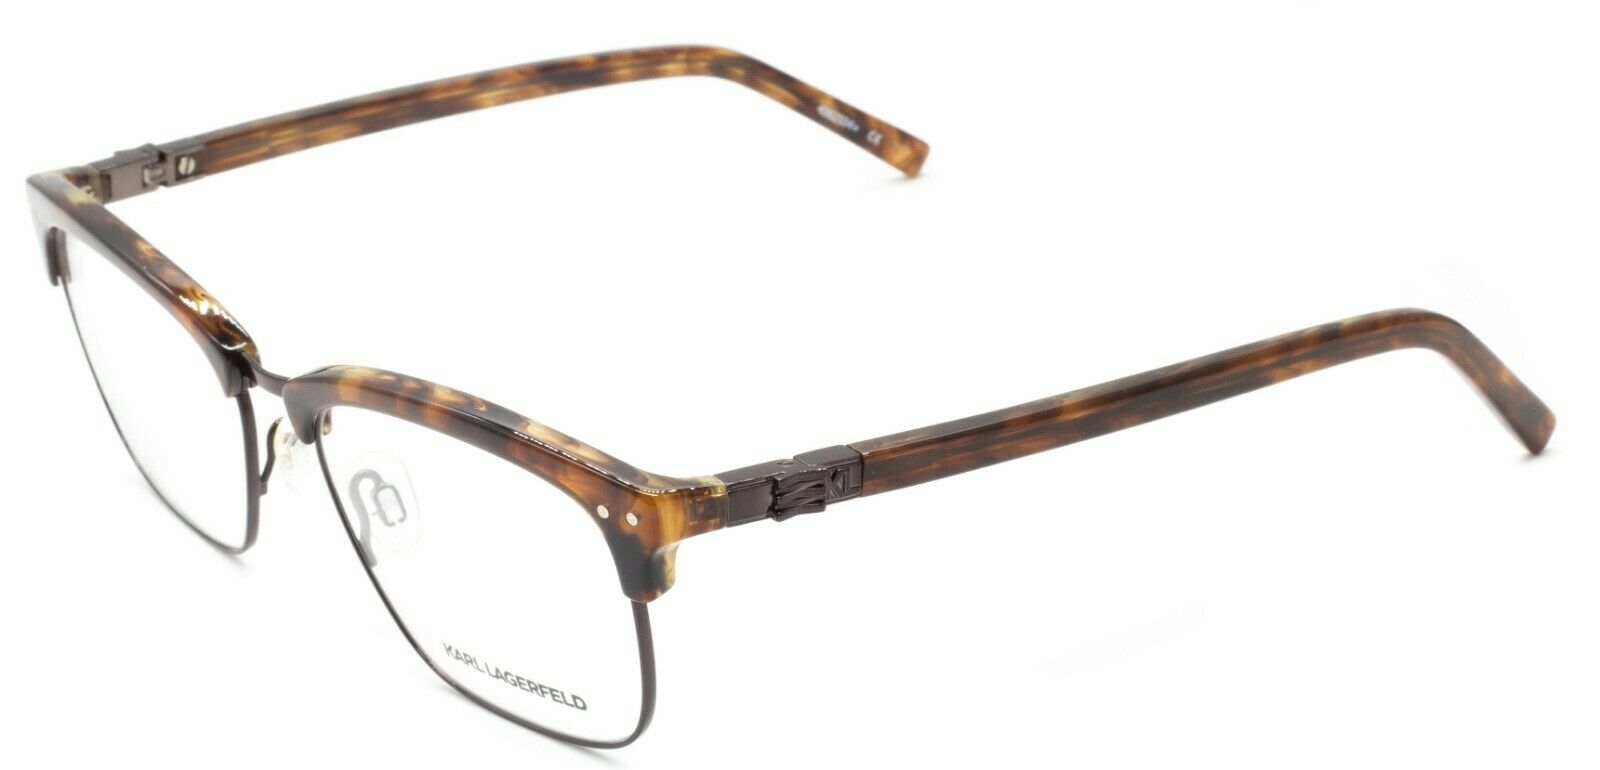 Opeenvolgend Masaccio pijn doen KARL LAGERFELD KL 09 25663990 53mm Eyewear FRAMES RX Optical Eyeglasses  Glasses - GGV Eyewear